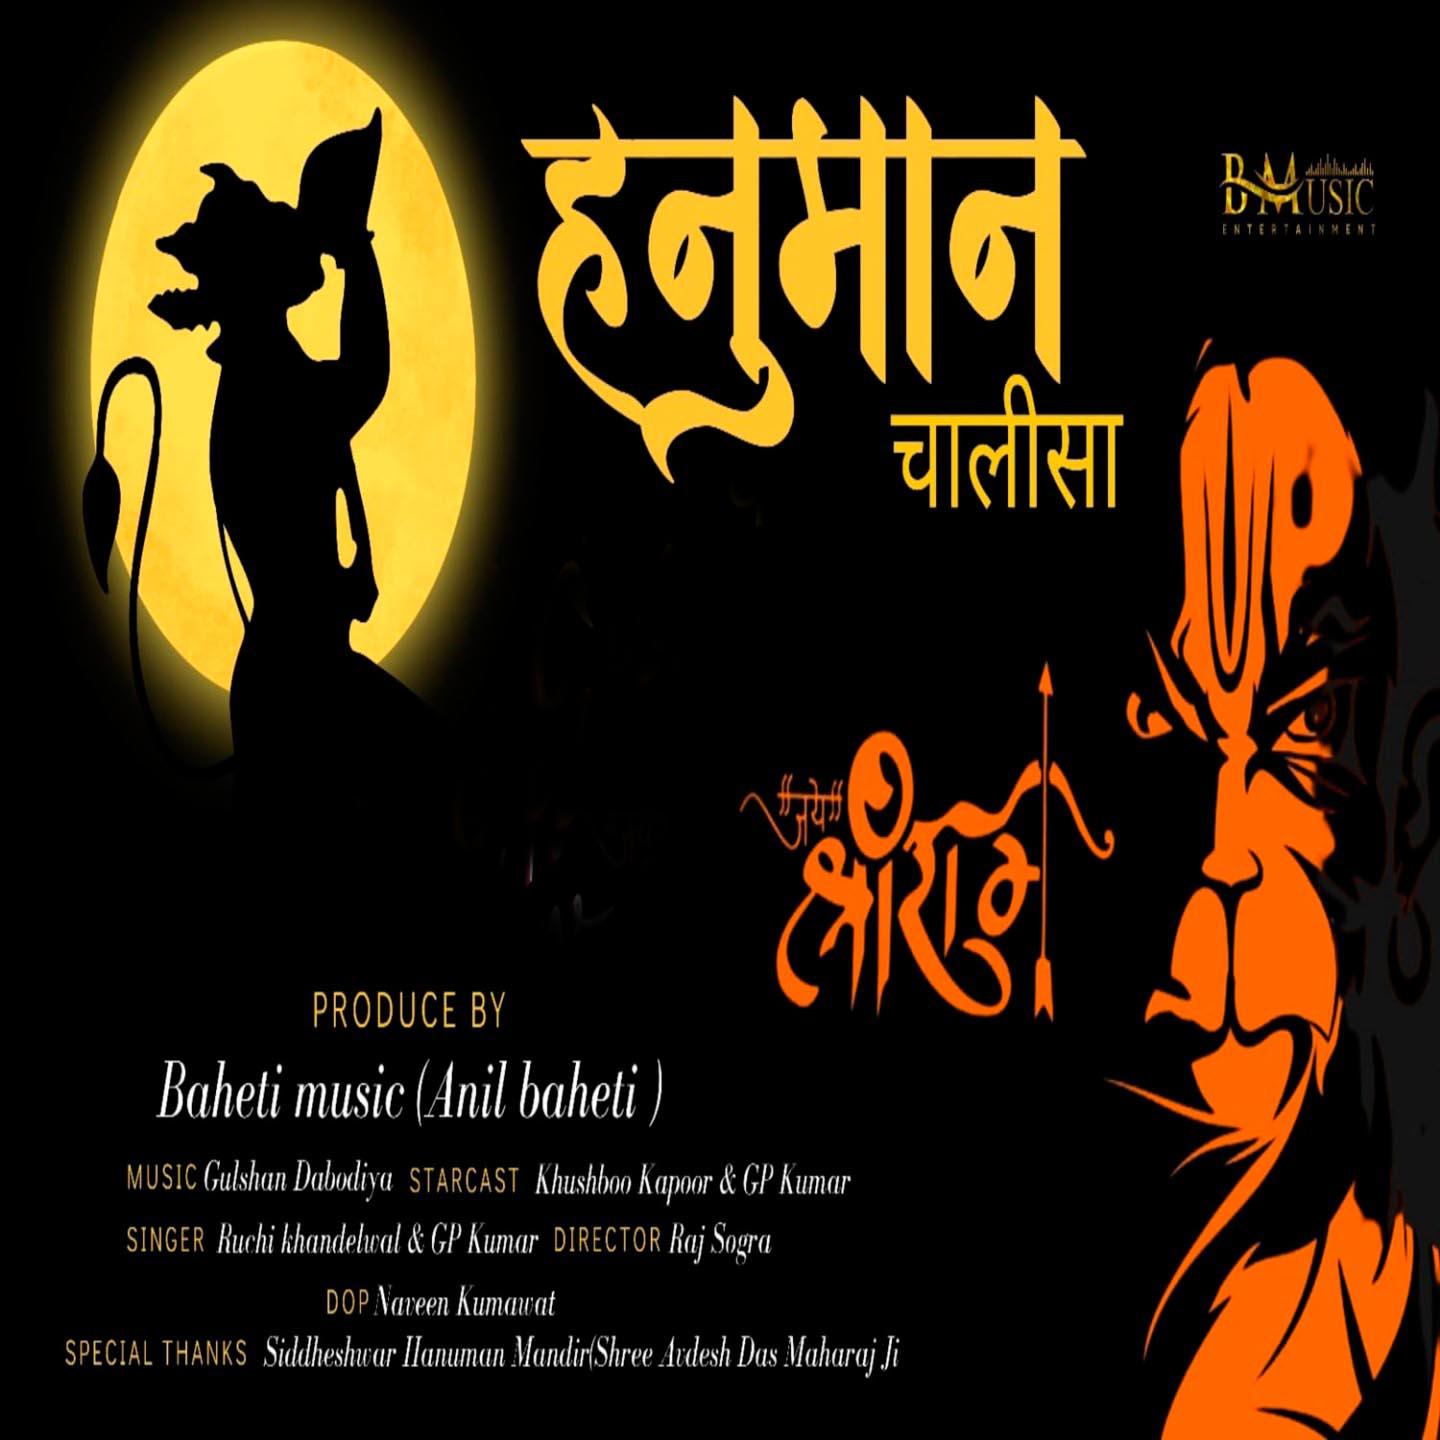 Постер альбома Hanuman Chalisa